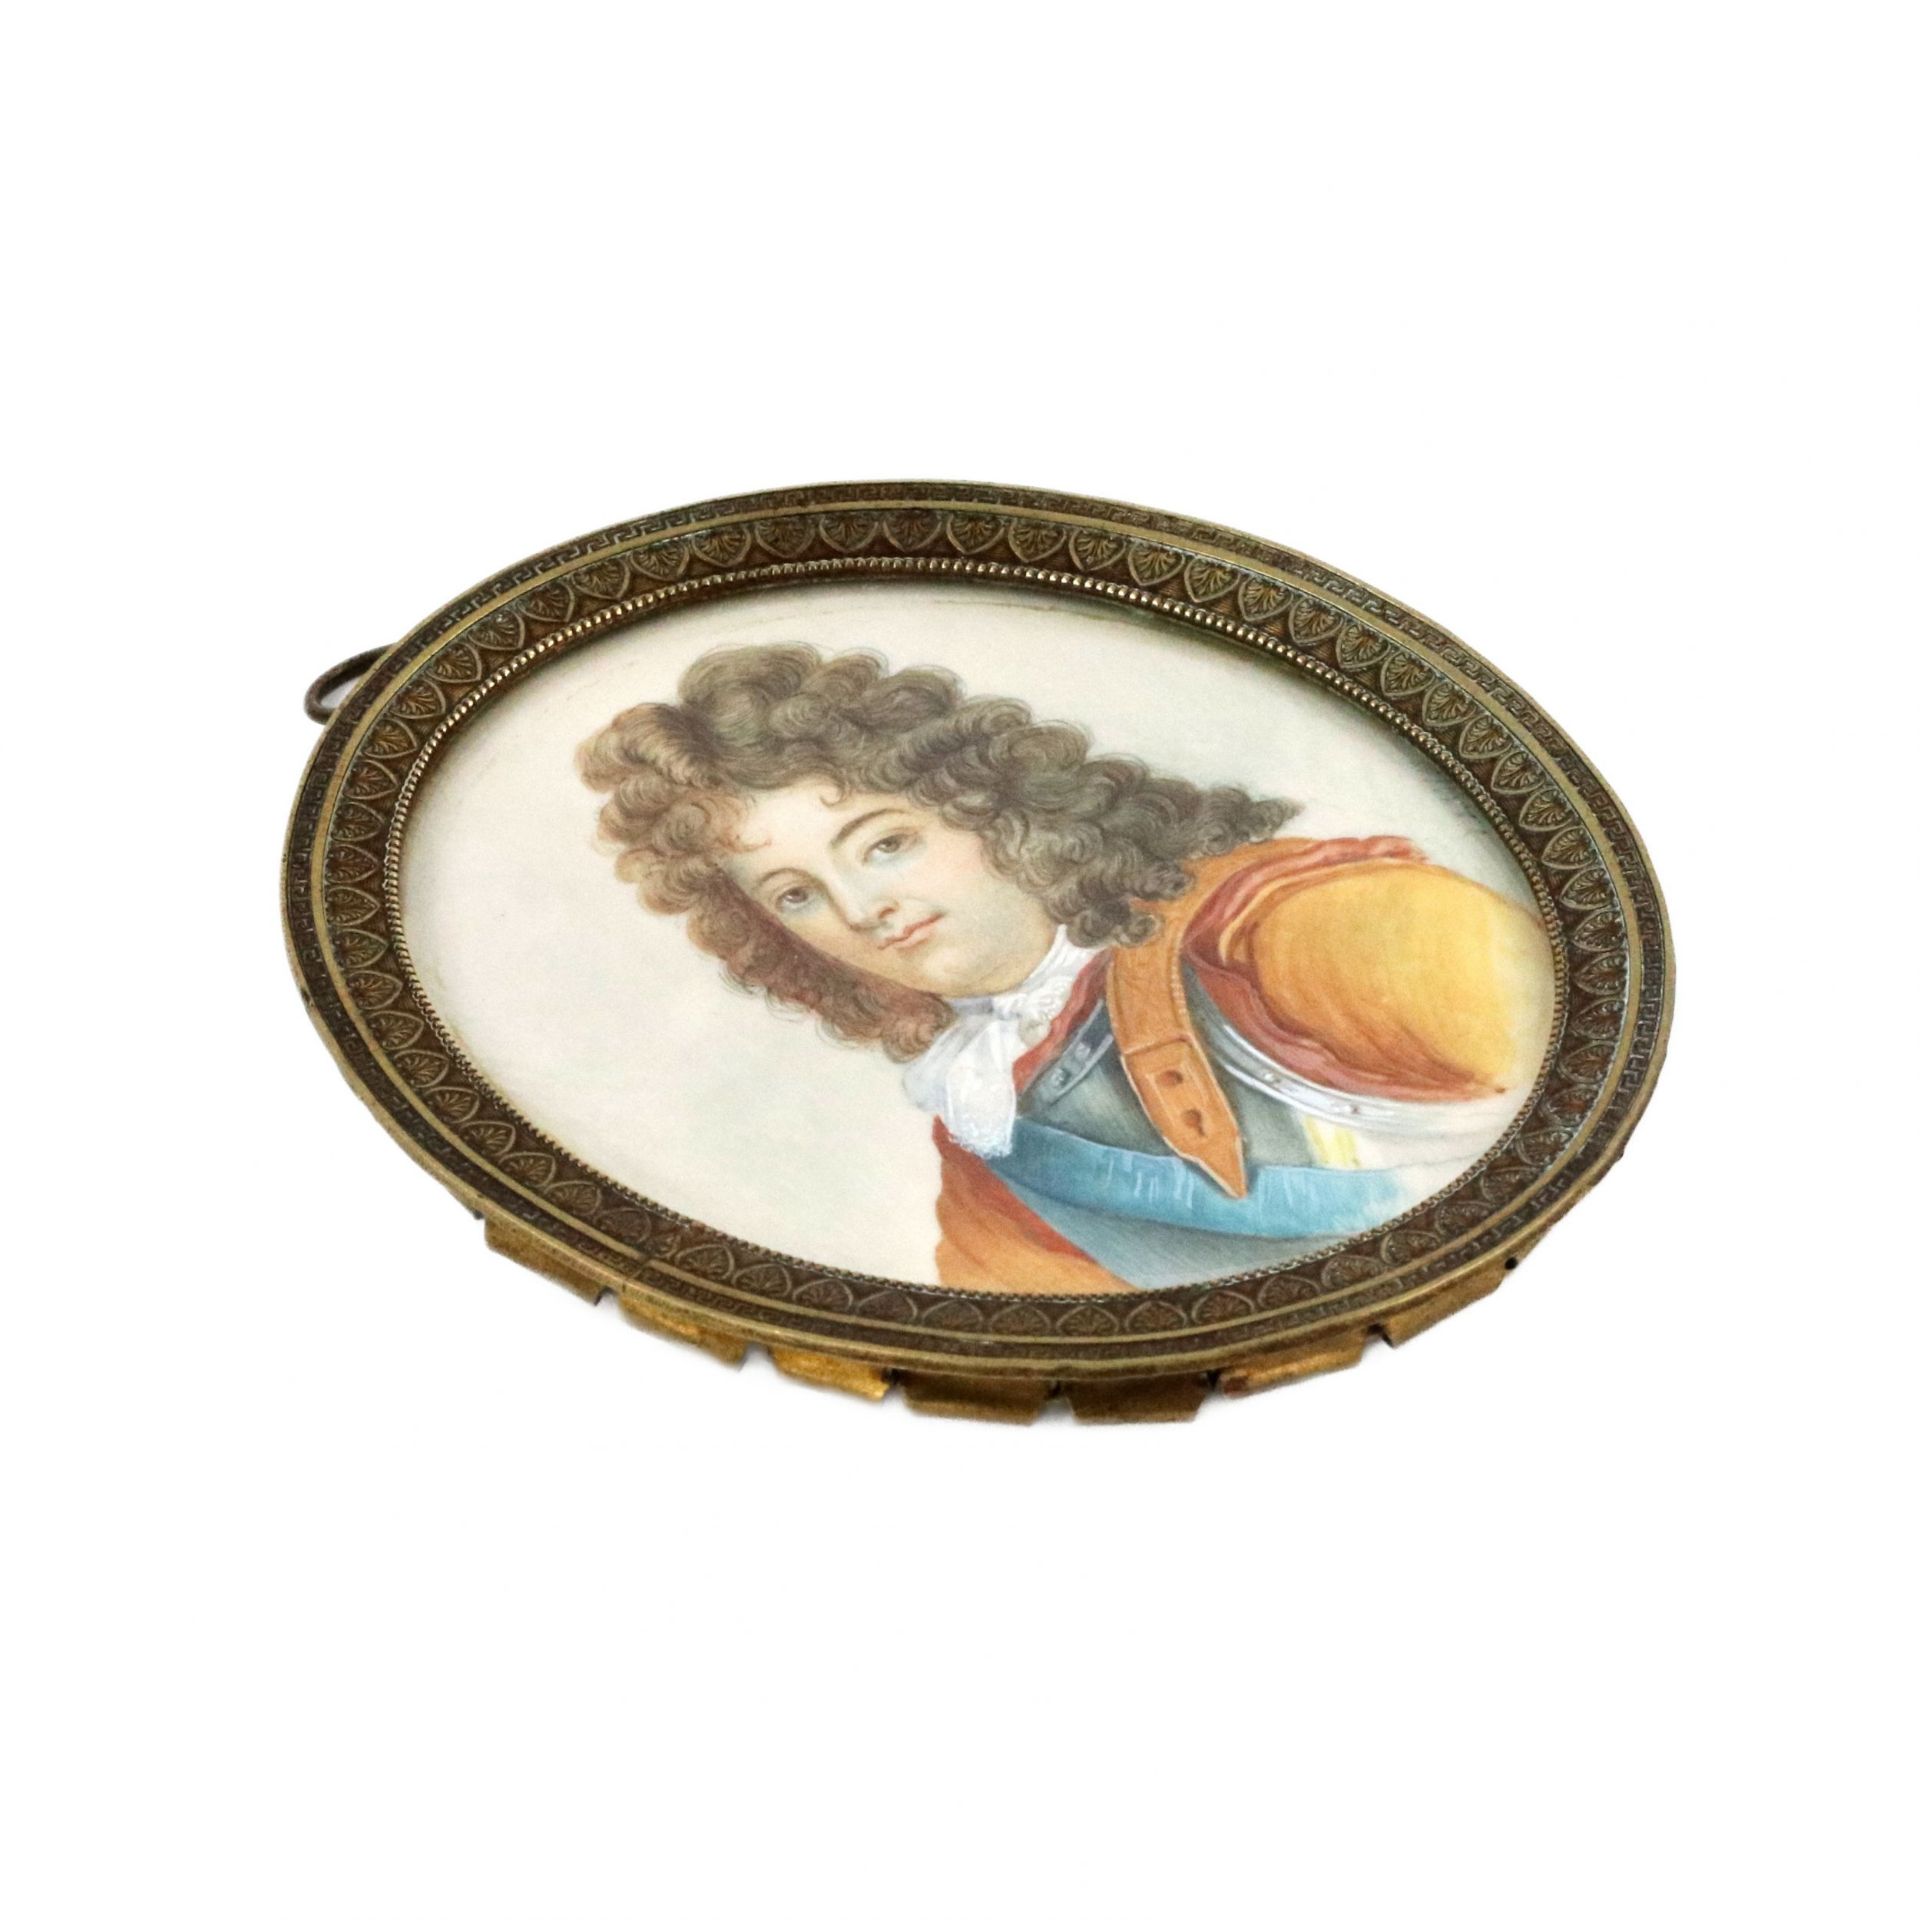 Louis XIV miniature. - Image 2 of 3